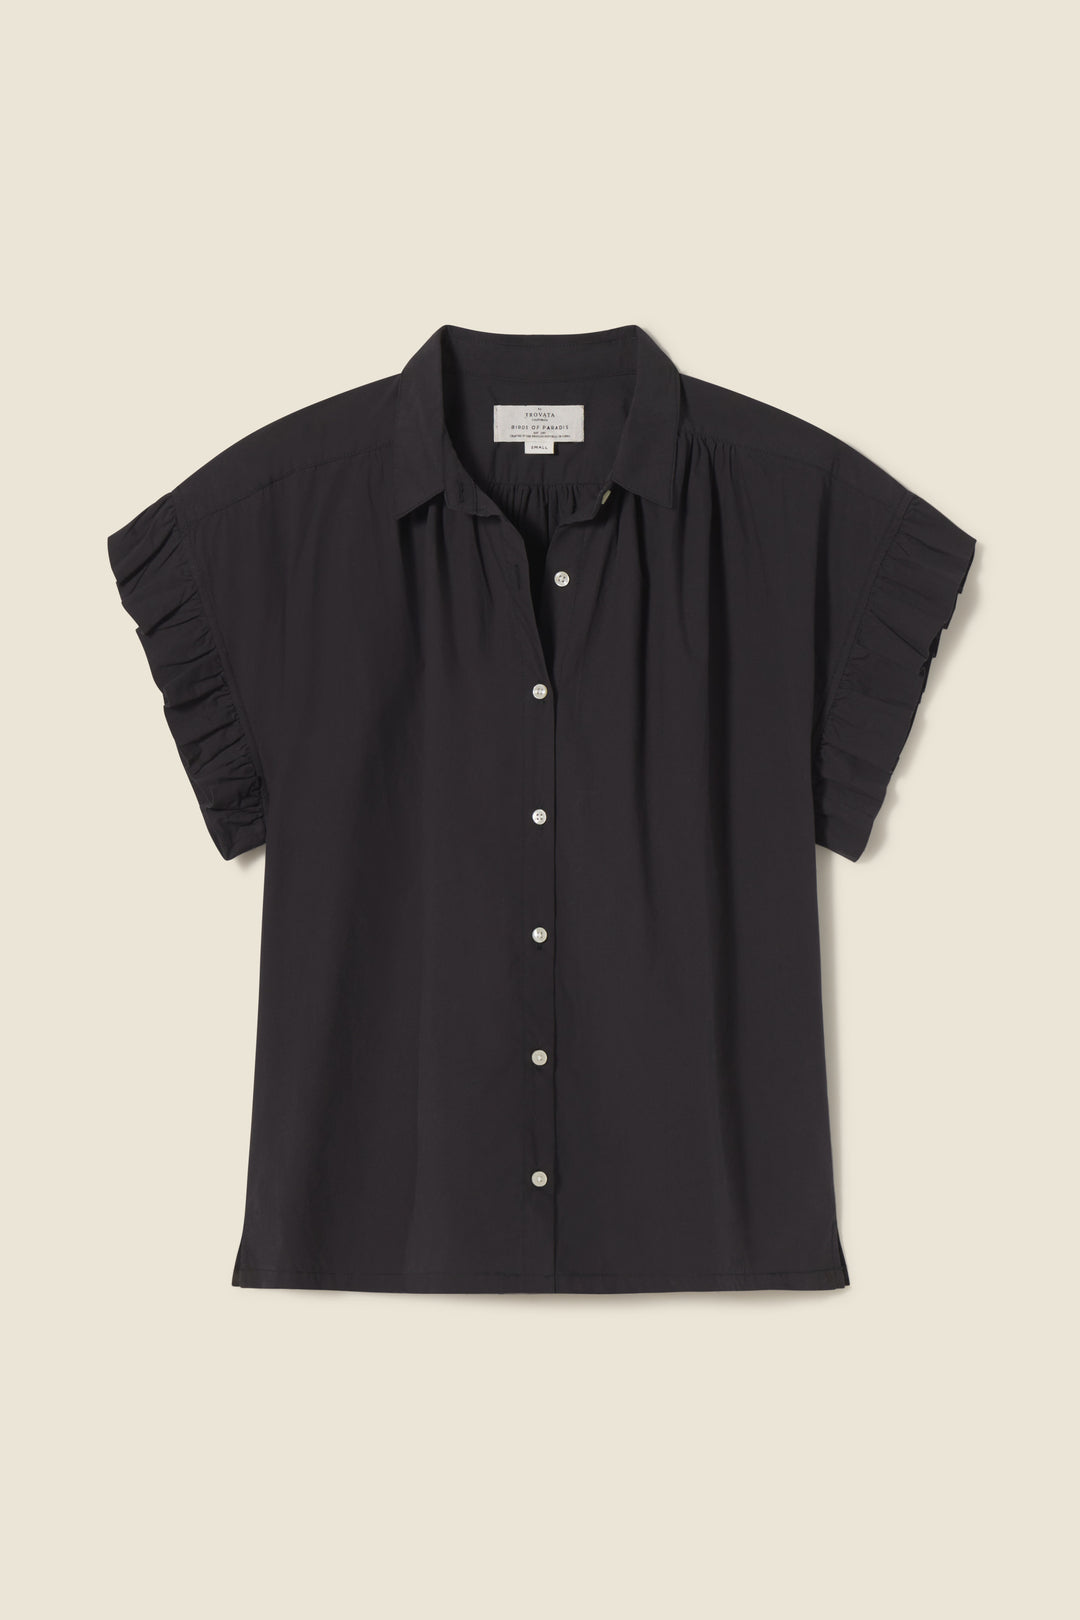 Trovata - Marianne B Ruffle Sleeve Shirt in Black